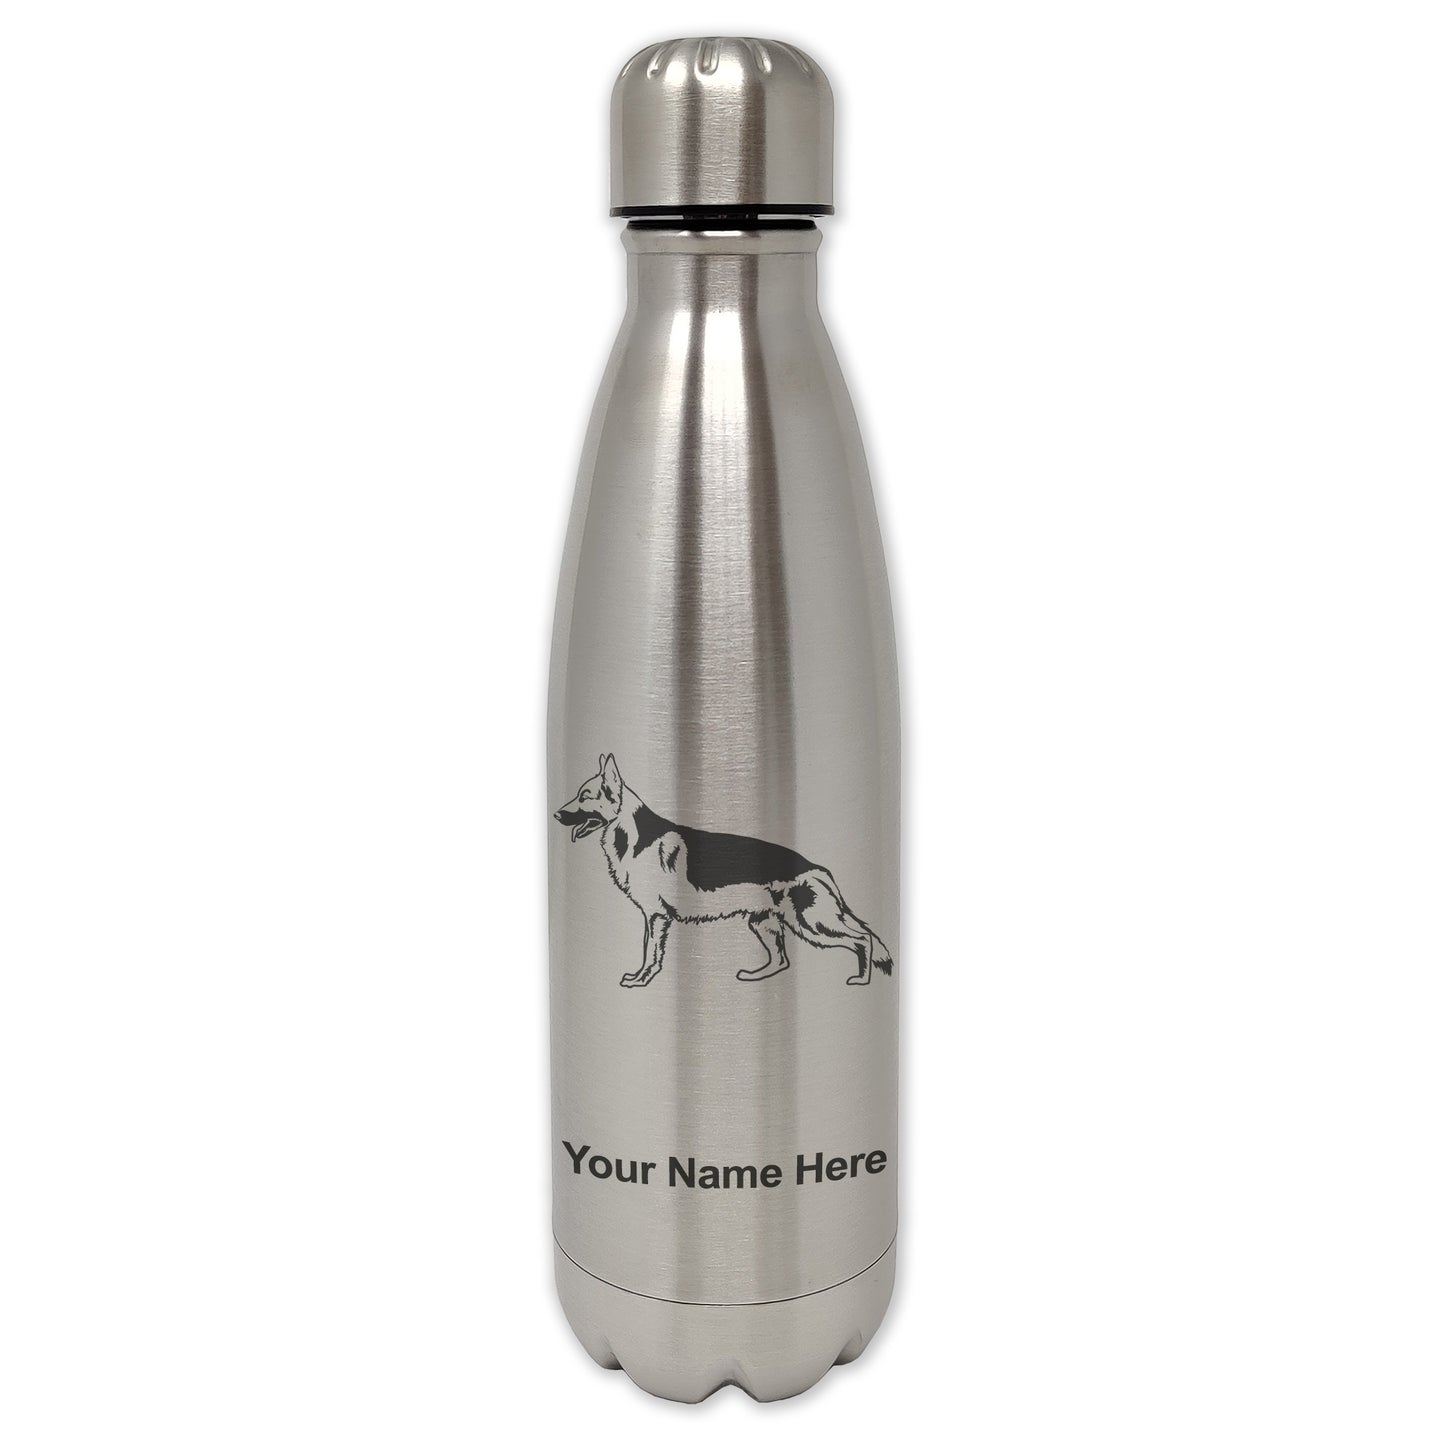 LaserGram Single Wall Water Bottle, German Shepherd Dog, Personalized Engraving Included